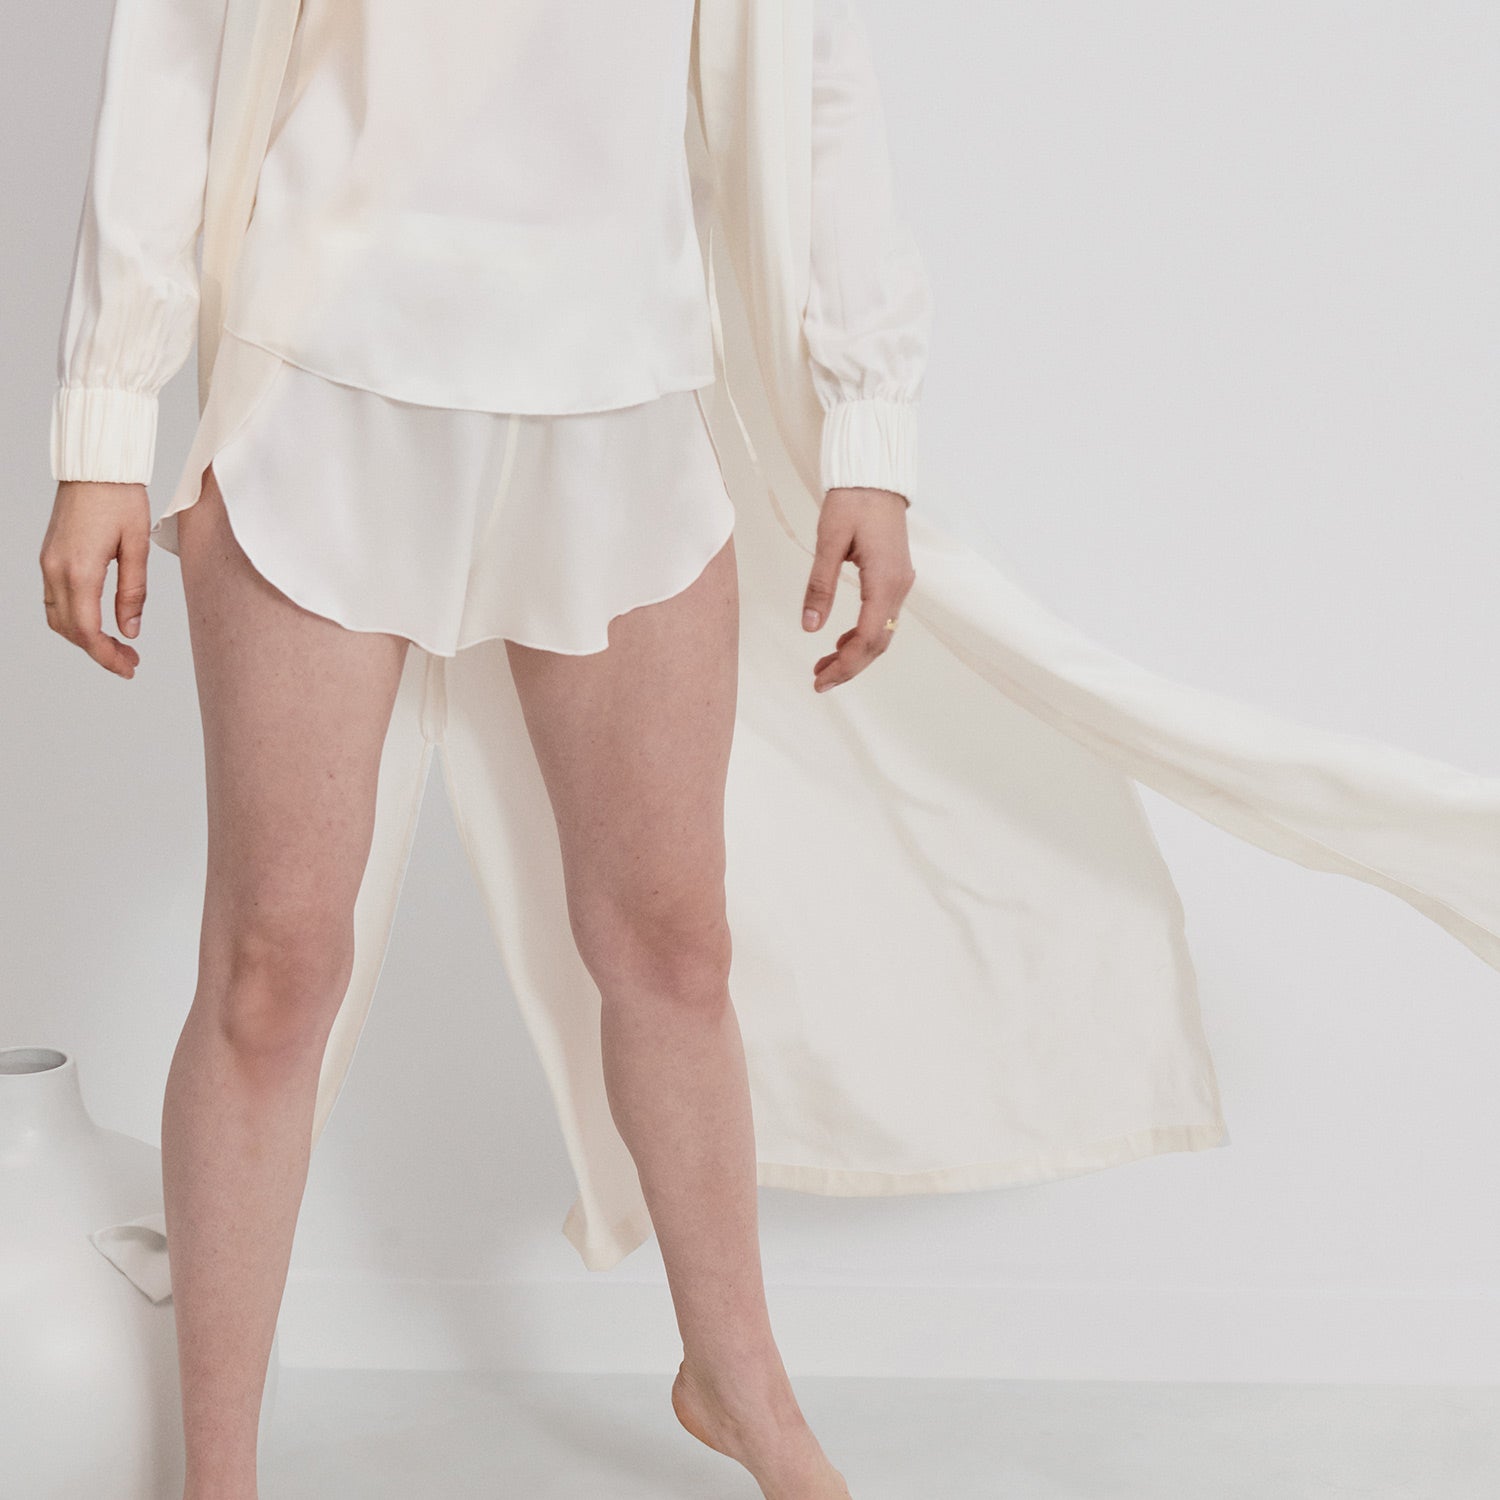 Lunya Sleepwear Washable Silk Long Robe - #Tranquil White